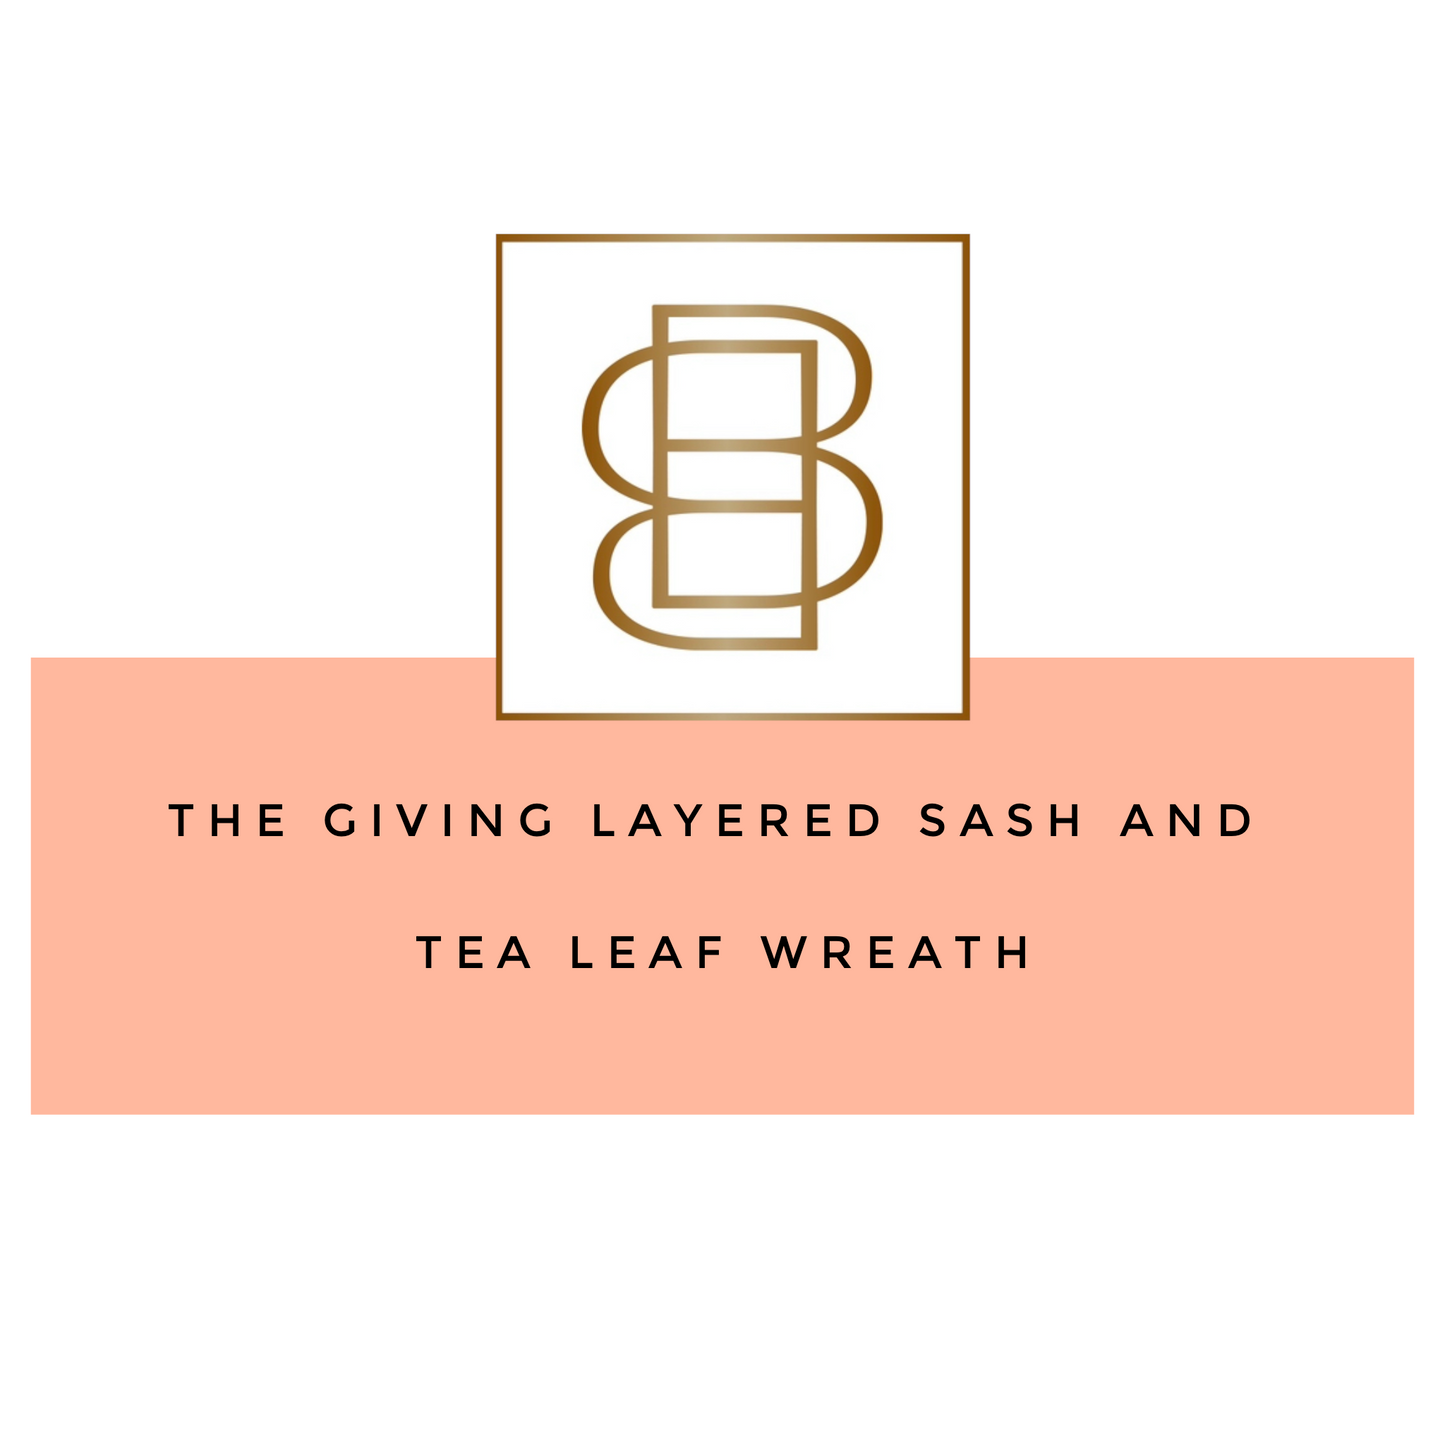 The Giving Layered Sash And Tea Leaf Wreath